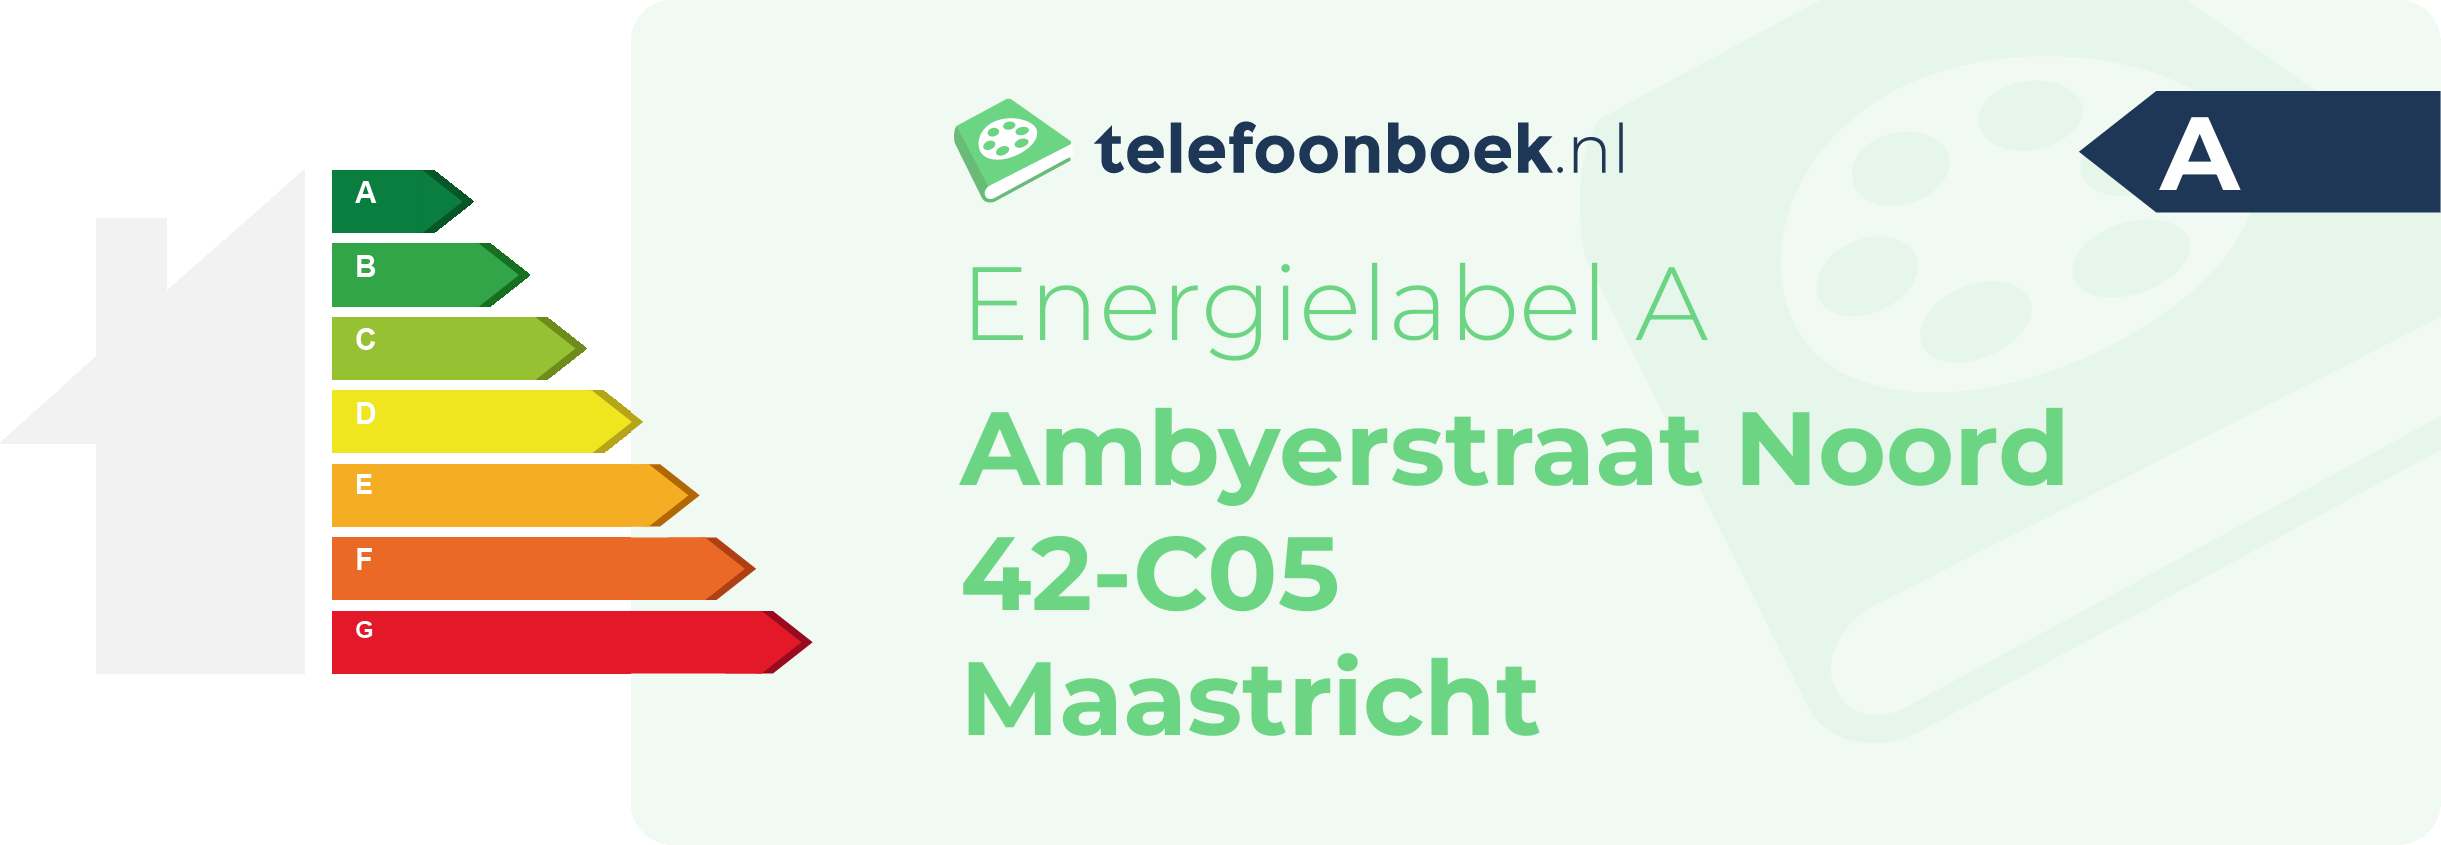 Energielabel Ambyerstraat Noord 42-C05 Maastricht